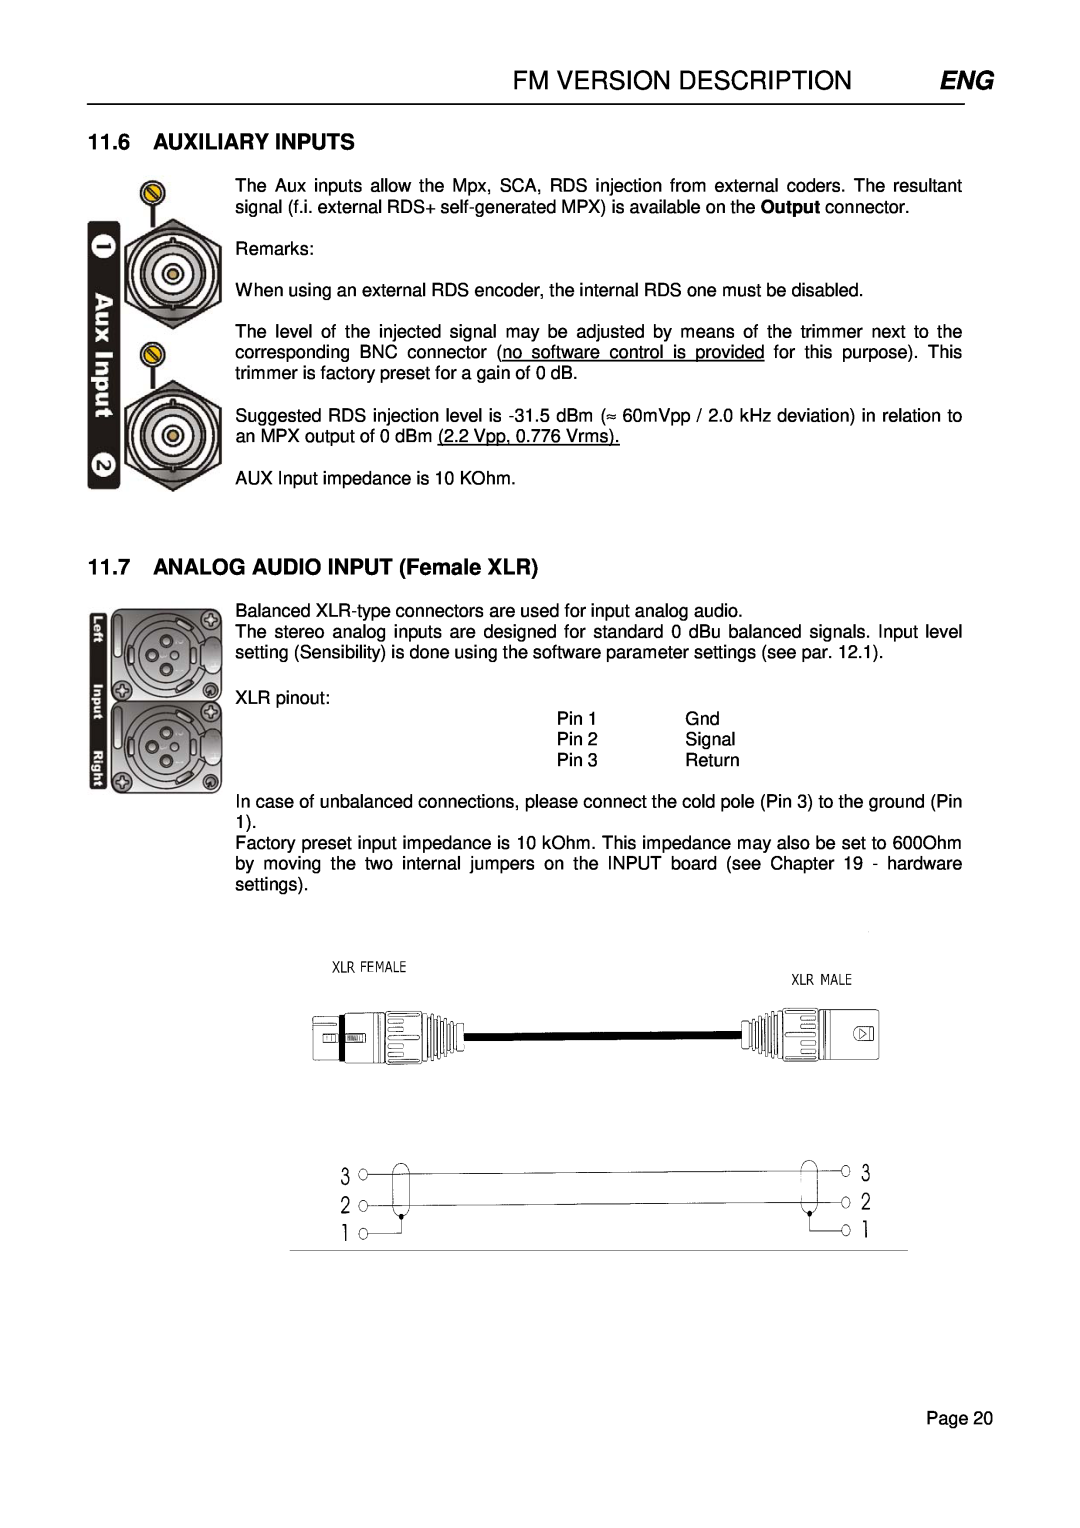 Falcon 15 manual Fm Version Description, 11.6AUXILIARY INPUTS, 11.7ANALOG AUDIO INPUT Female XLR 